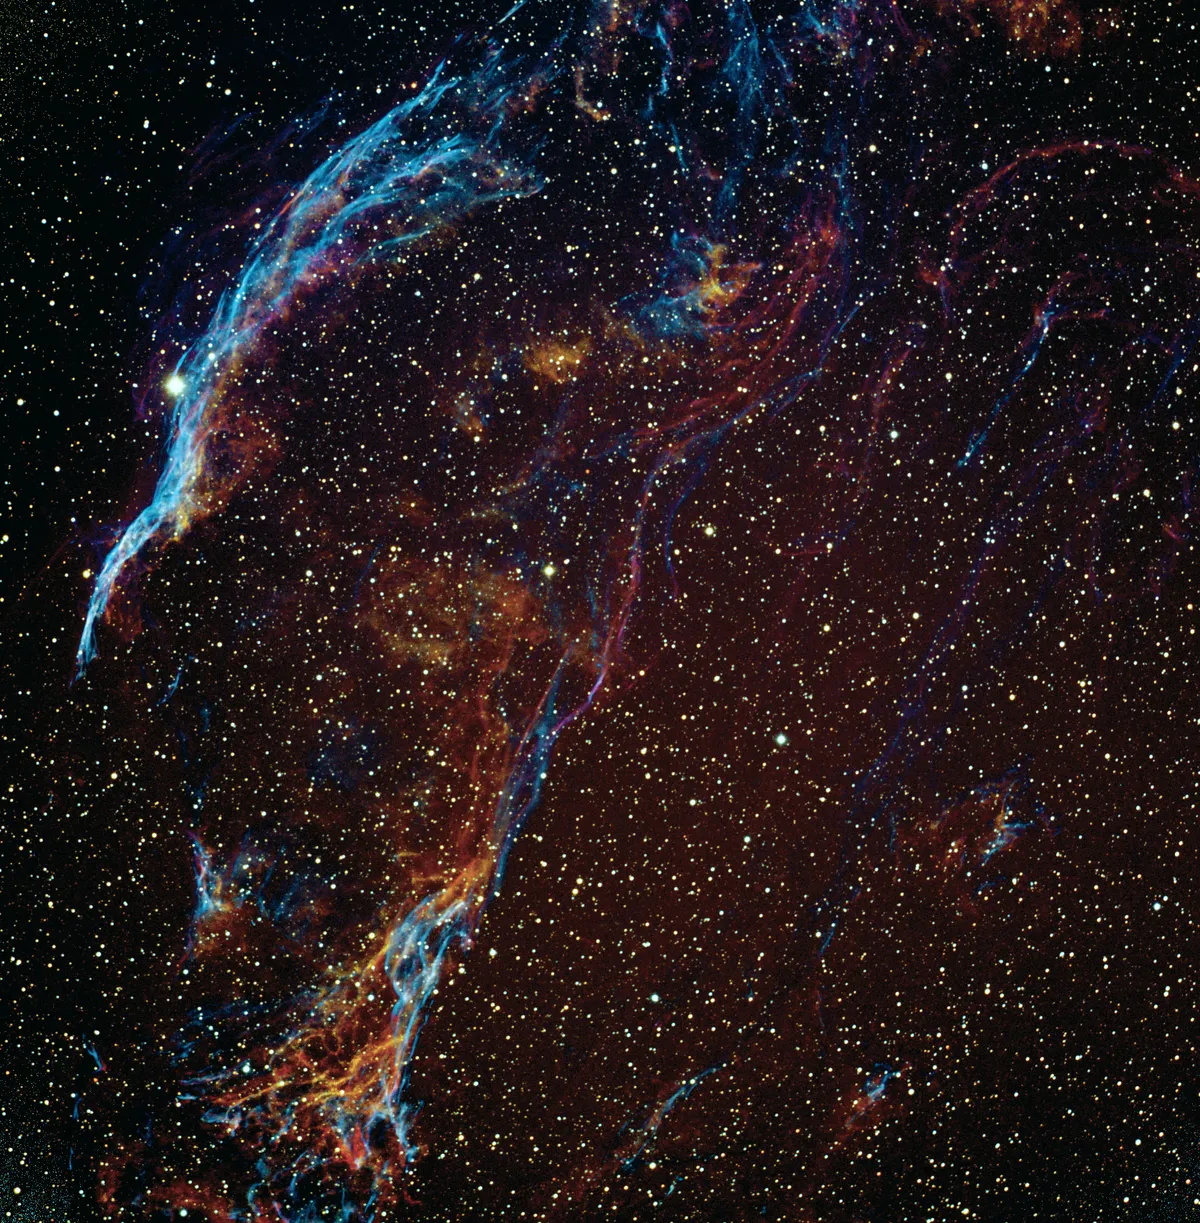 Veil Nebula by Sheila Whysall, Heanor, UK. Equipment: Takahashi FSQ 106 reduced, QSI 683 wsg-8, GM1000 mount